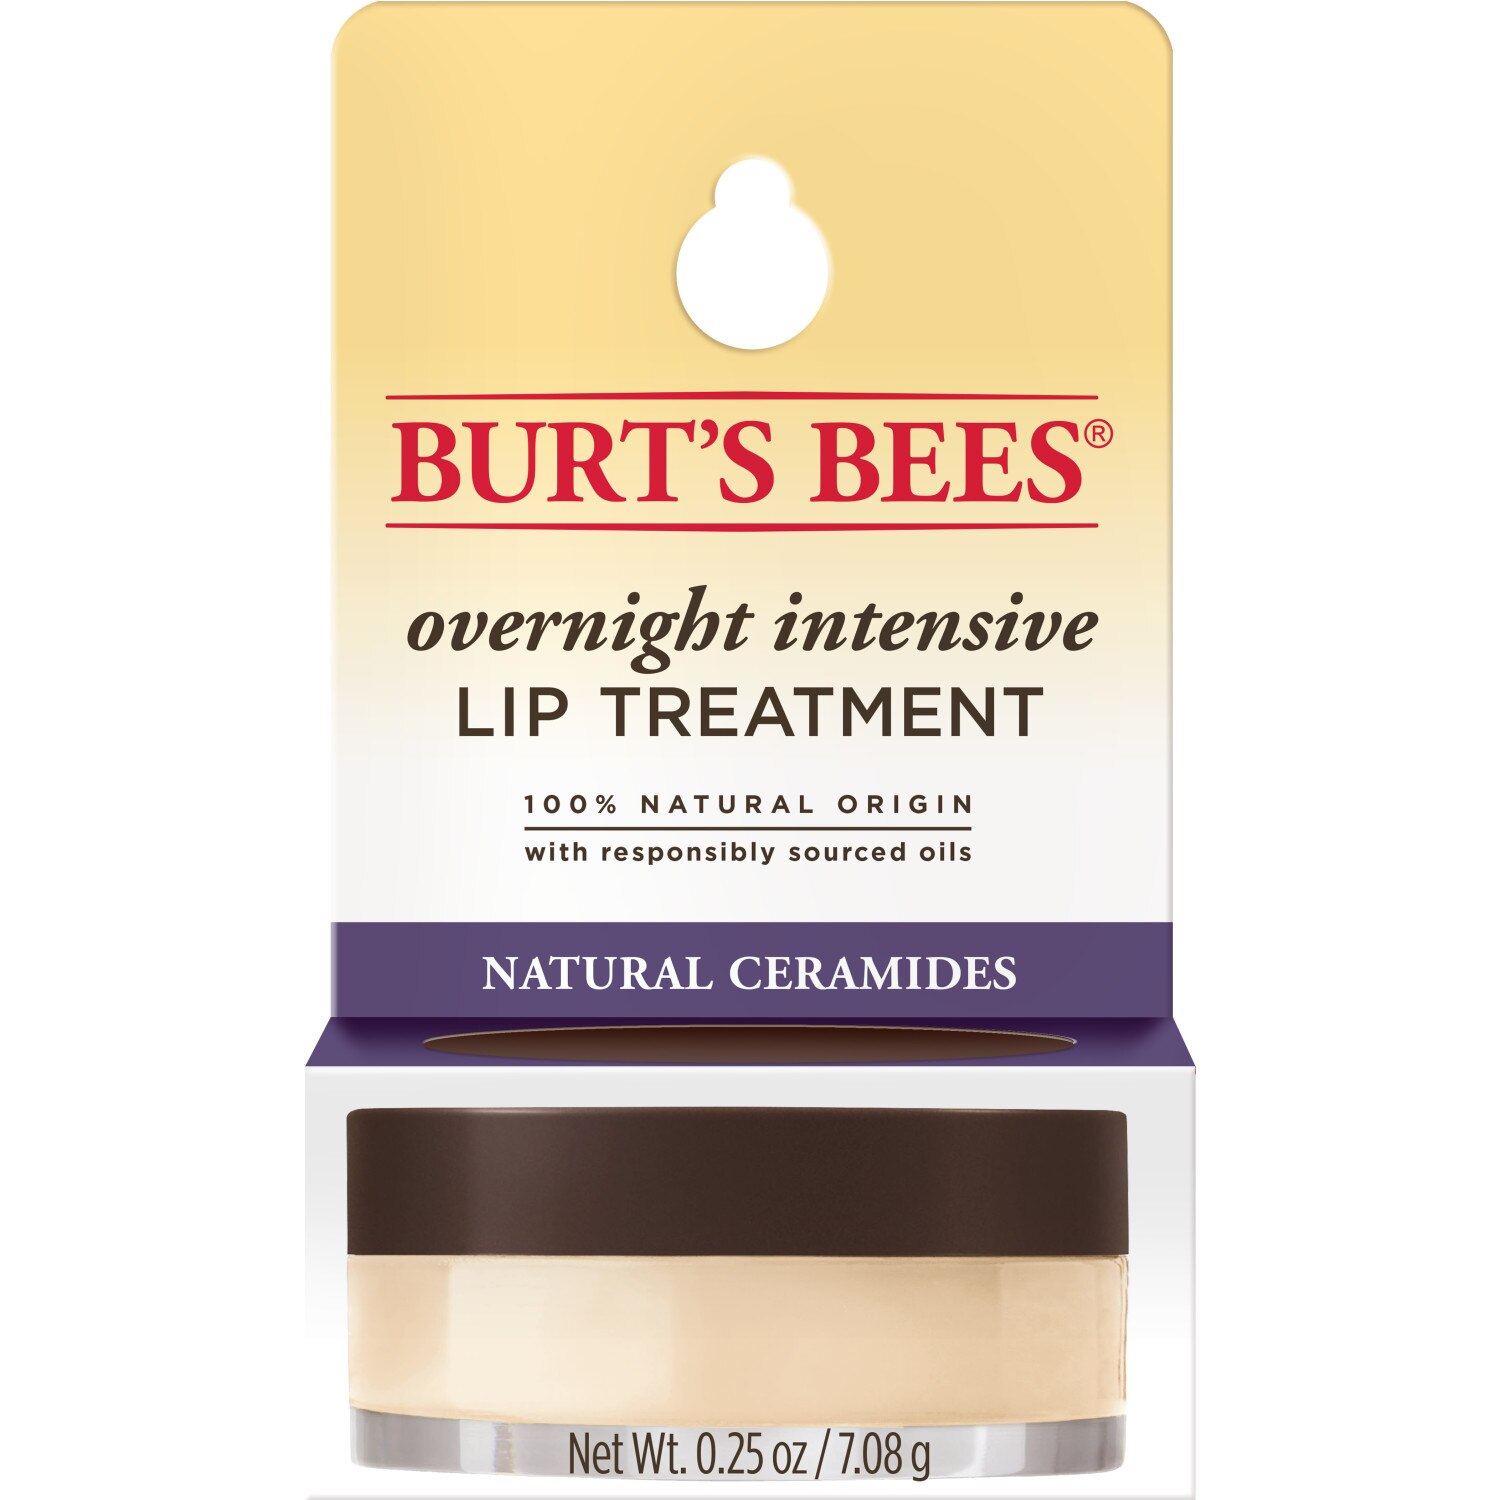 Burt's Bees 100% Natural Overnight Intensive Lip Treatment, Ultra-Conditioning Lip Care, 0.25 OZ